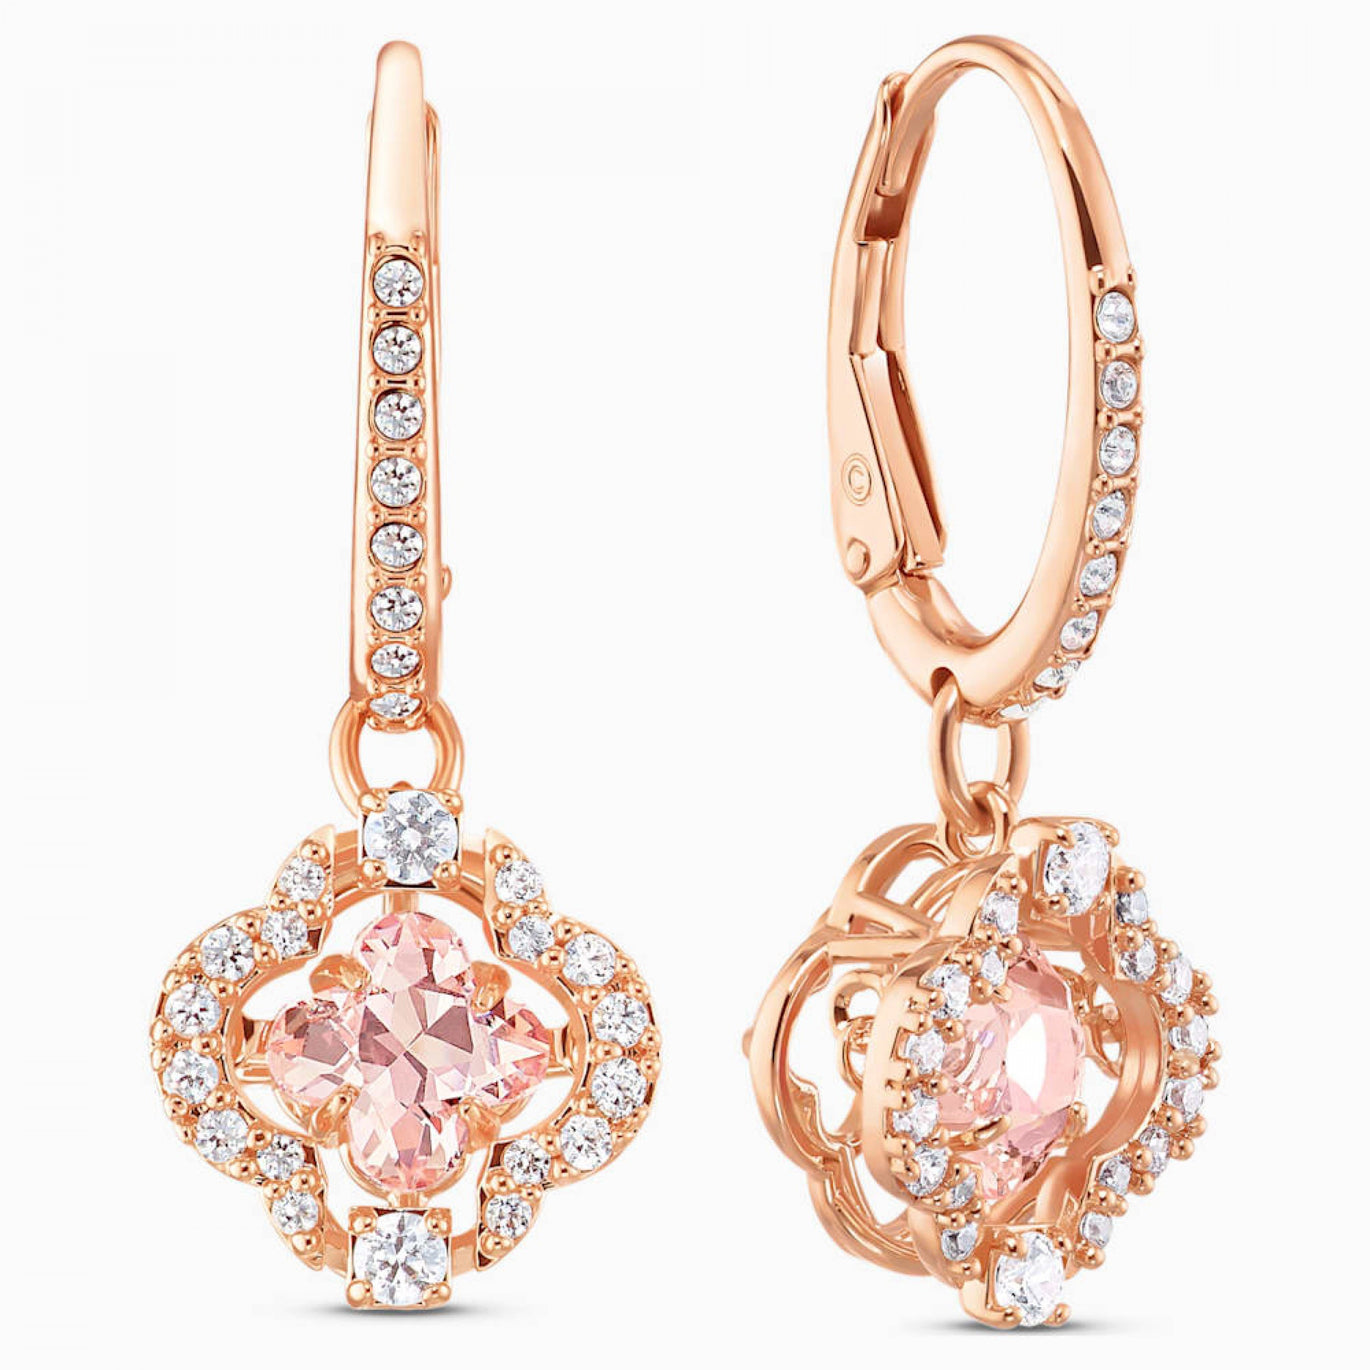 Swarovski Sparkling Dance Clover Pierced Earrings, Pink, Rose-Gold Tone Plated